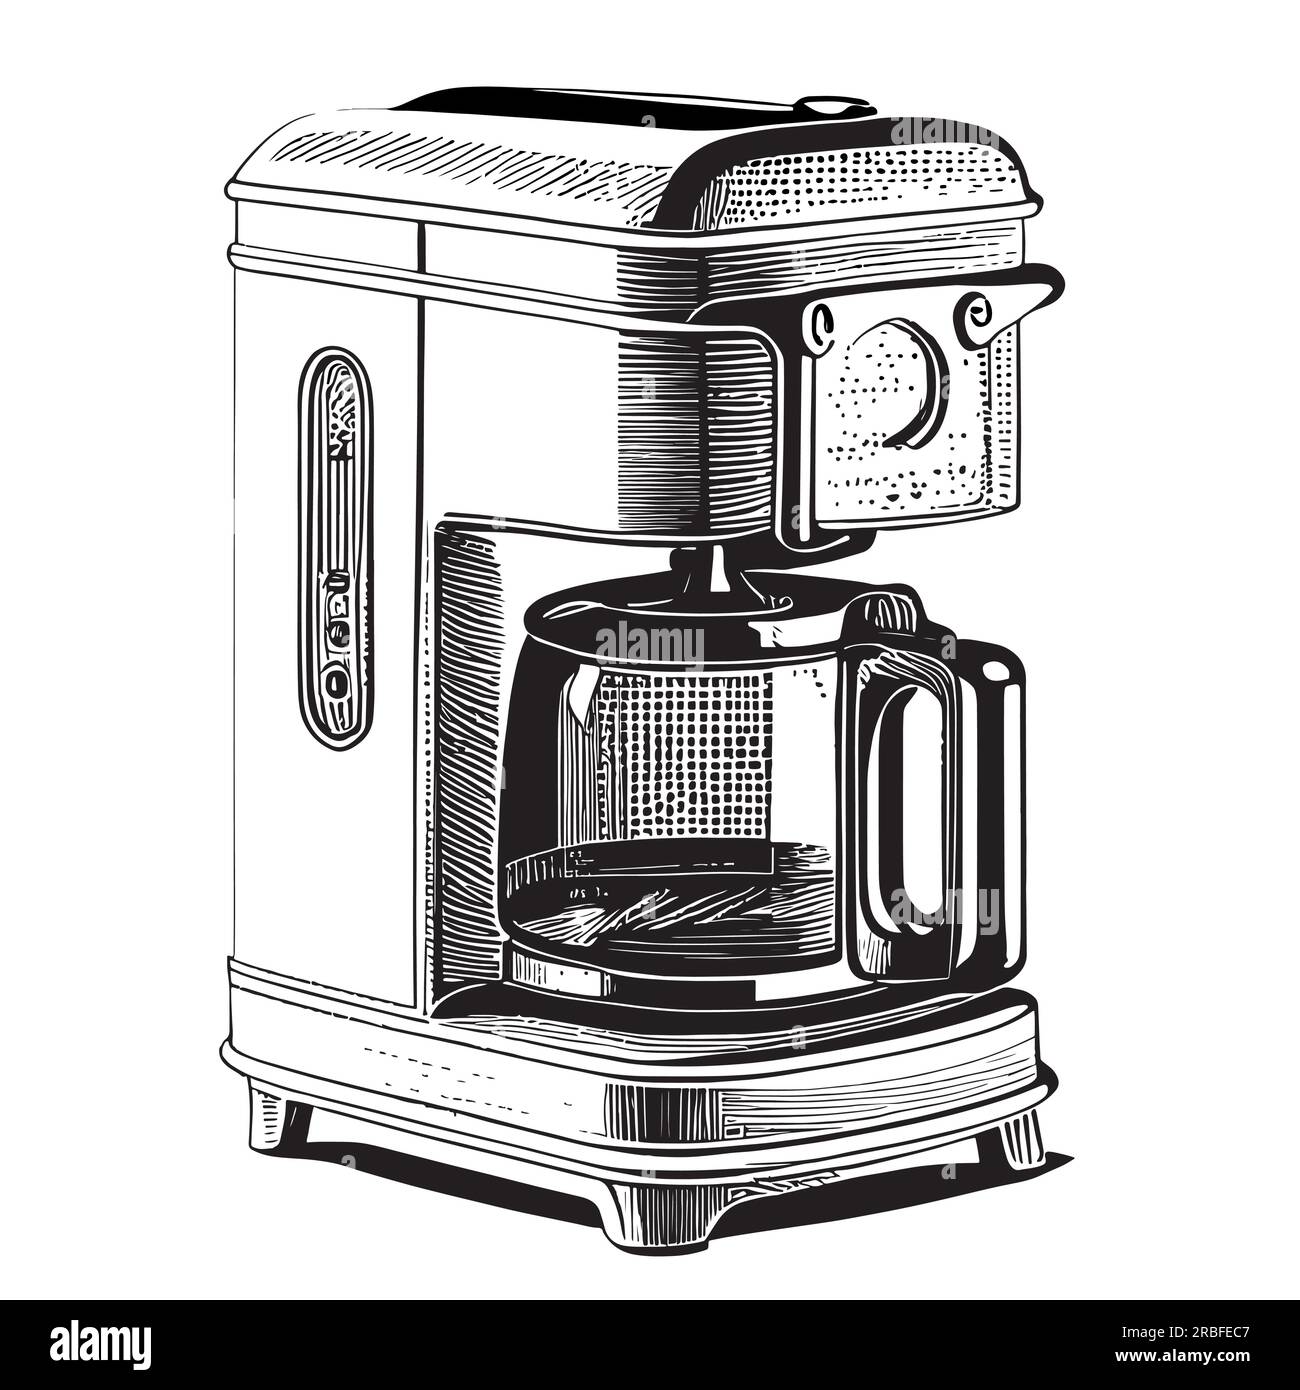 https://c8.alamy.com/comp/2RBFEC7/coffee-maker-vintage-machine-sketch-hand-drawn-coffee-vector-illustration-2RBFEC7.jpg